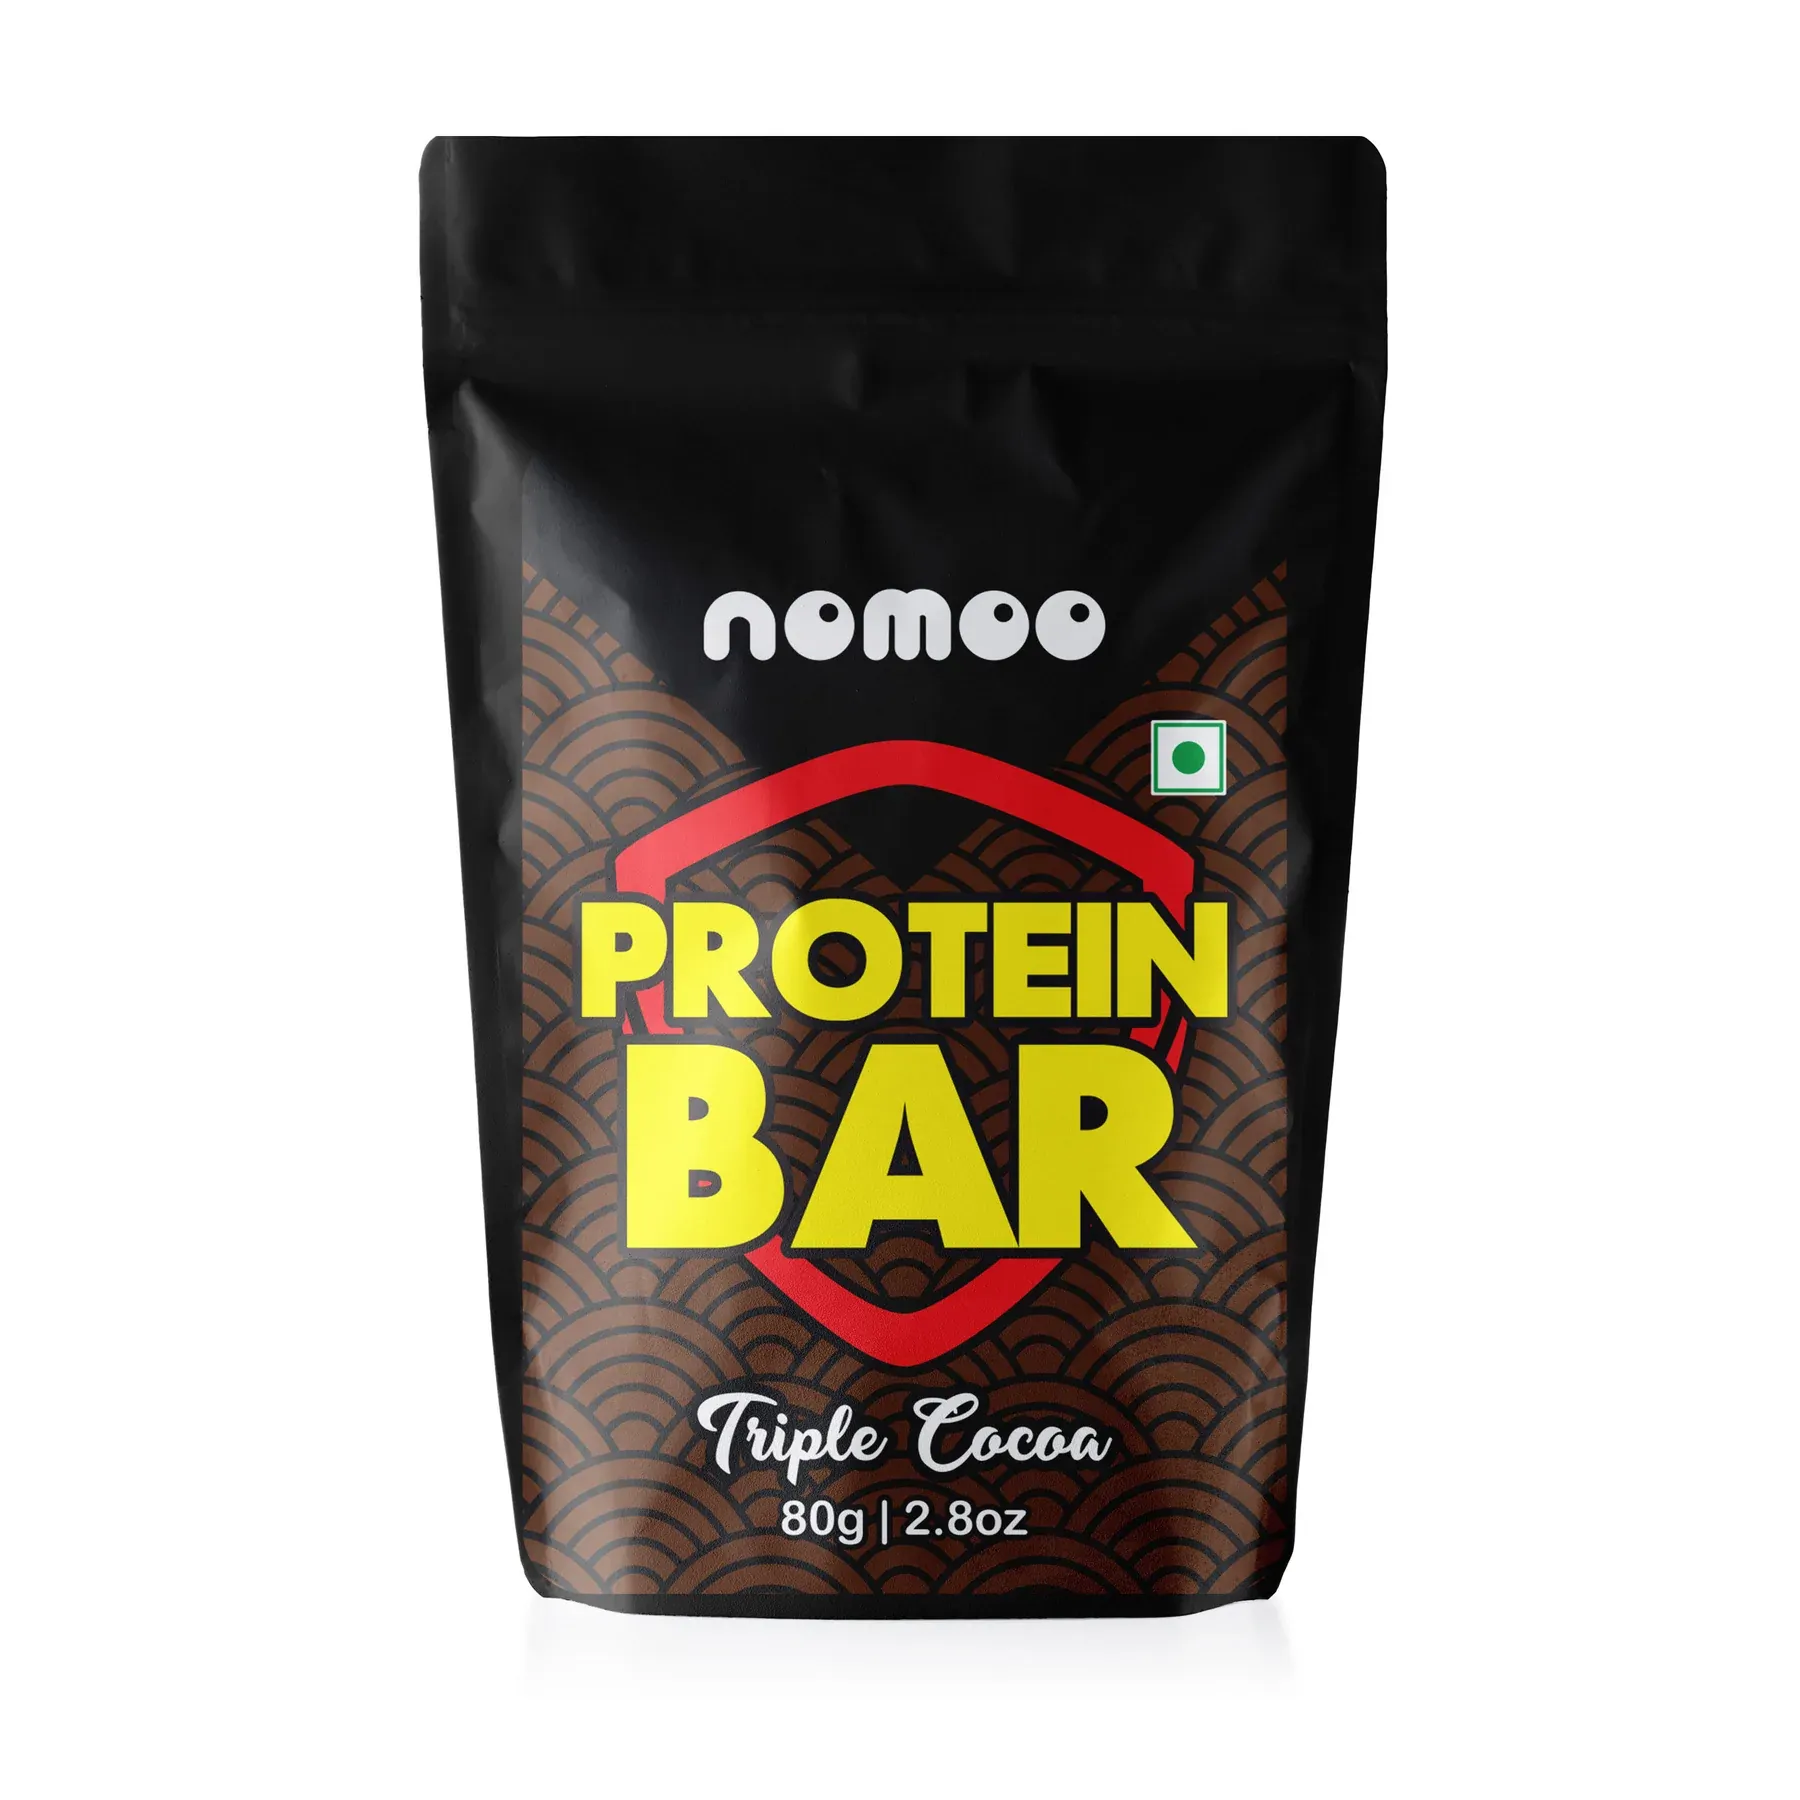 NOMOO Protein Bar Triple Cocoa Image